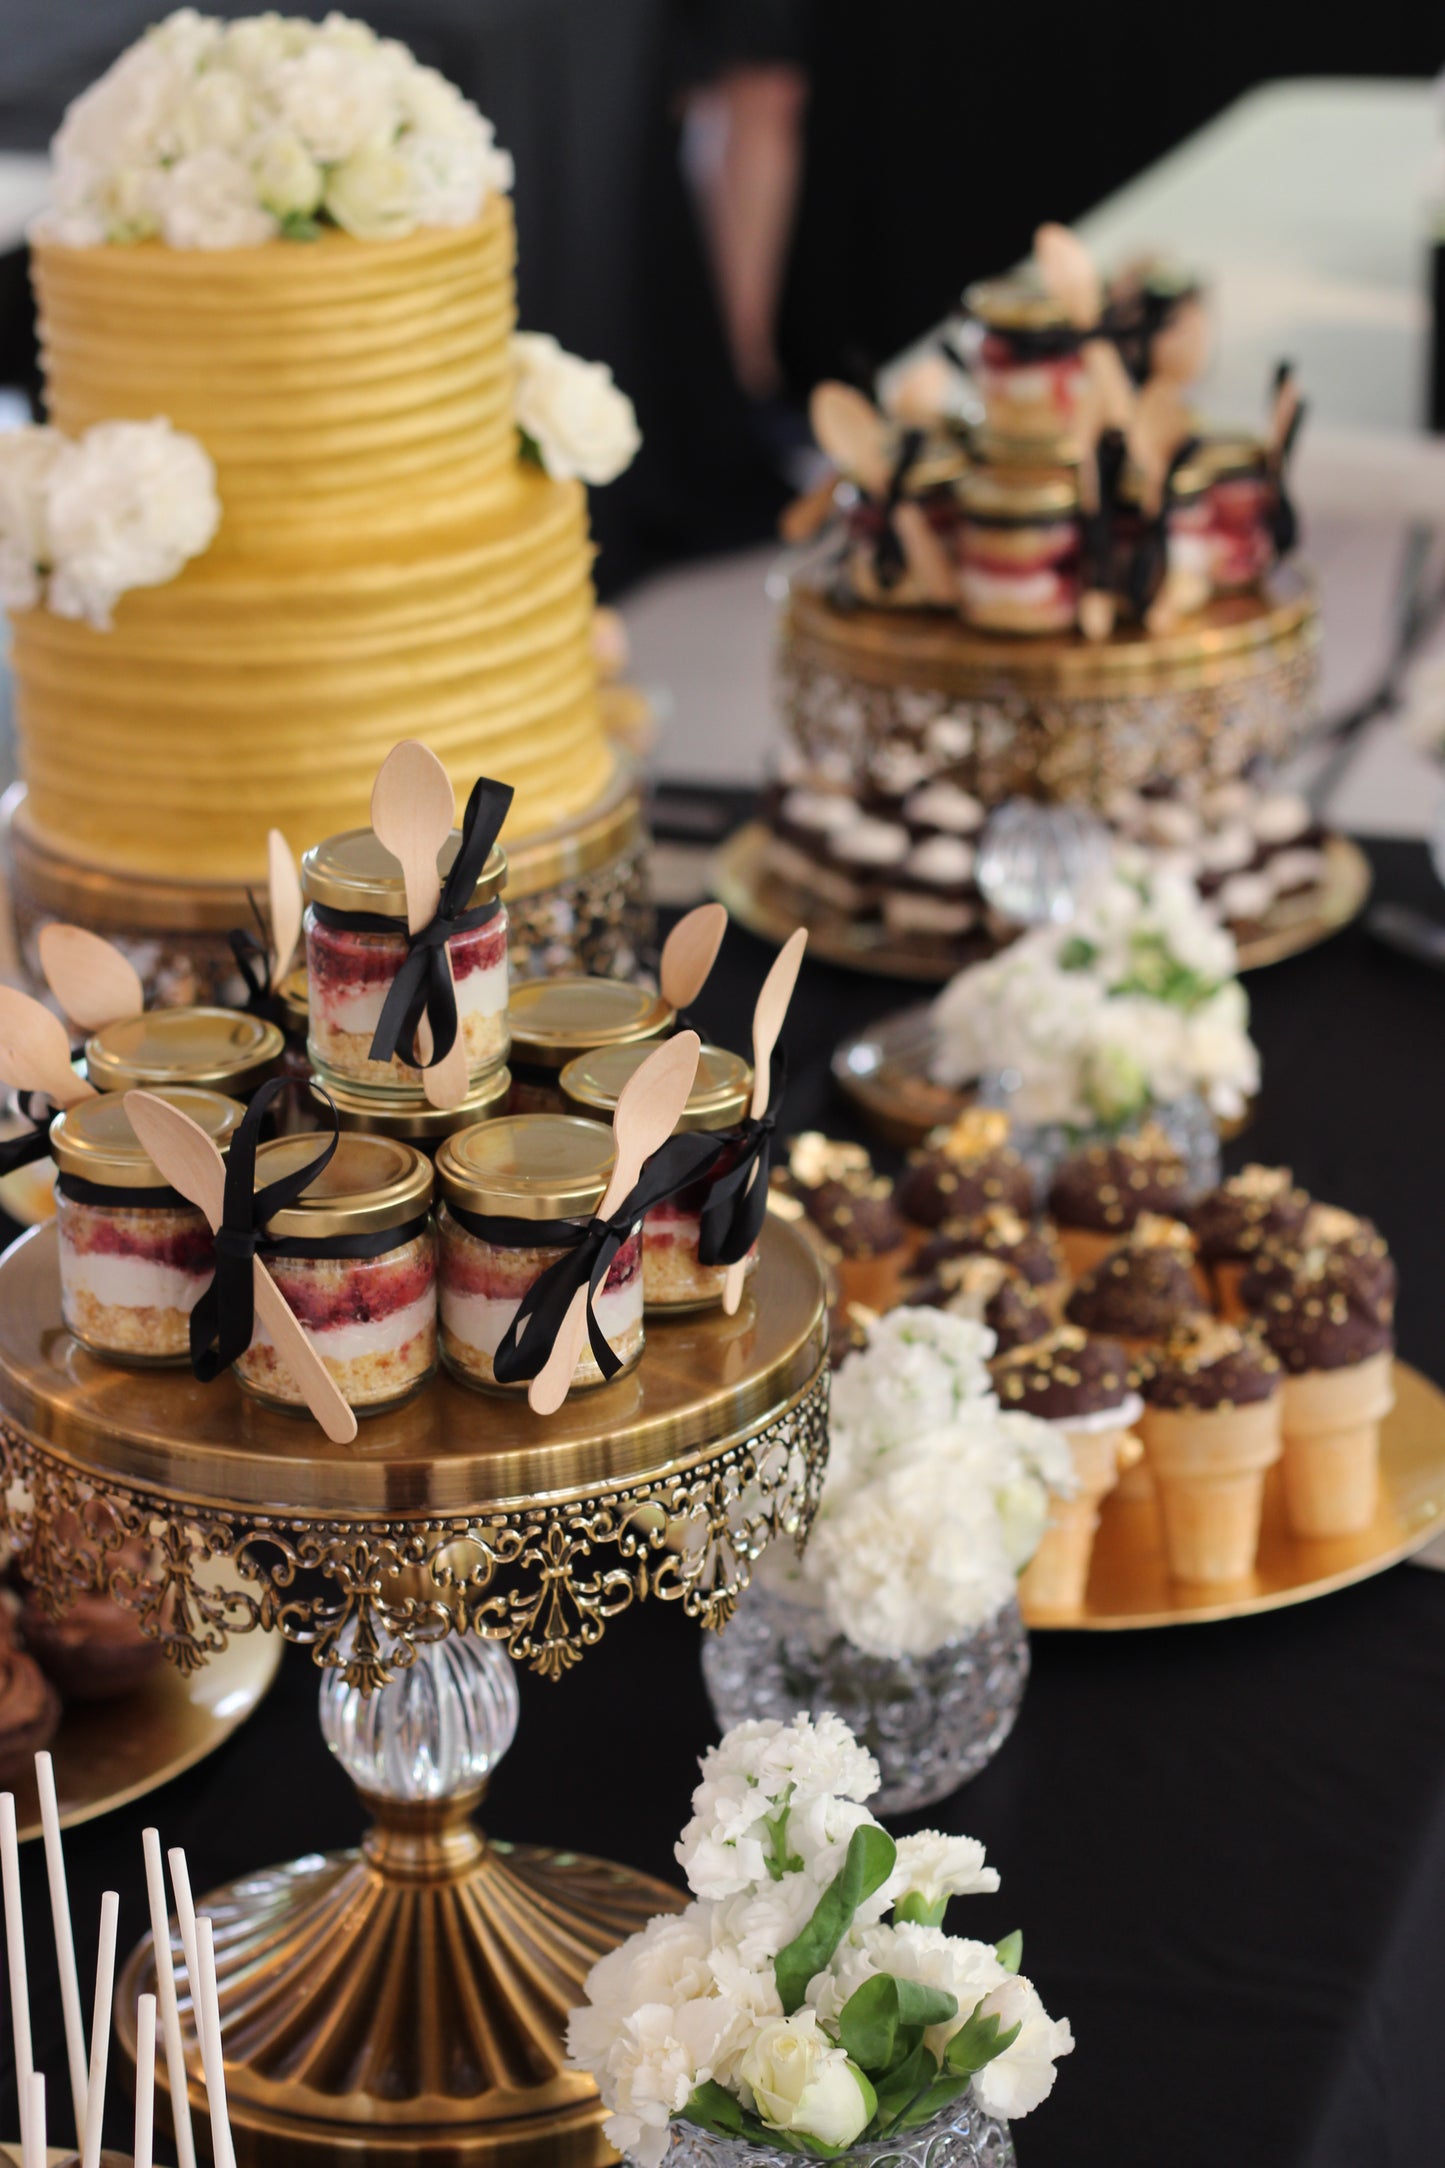 Grazing Dessert & Cake Gold, White & Black Theme Wedding